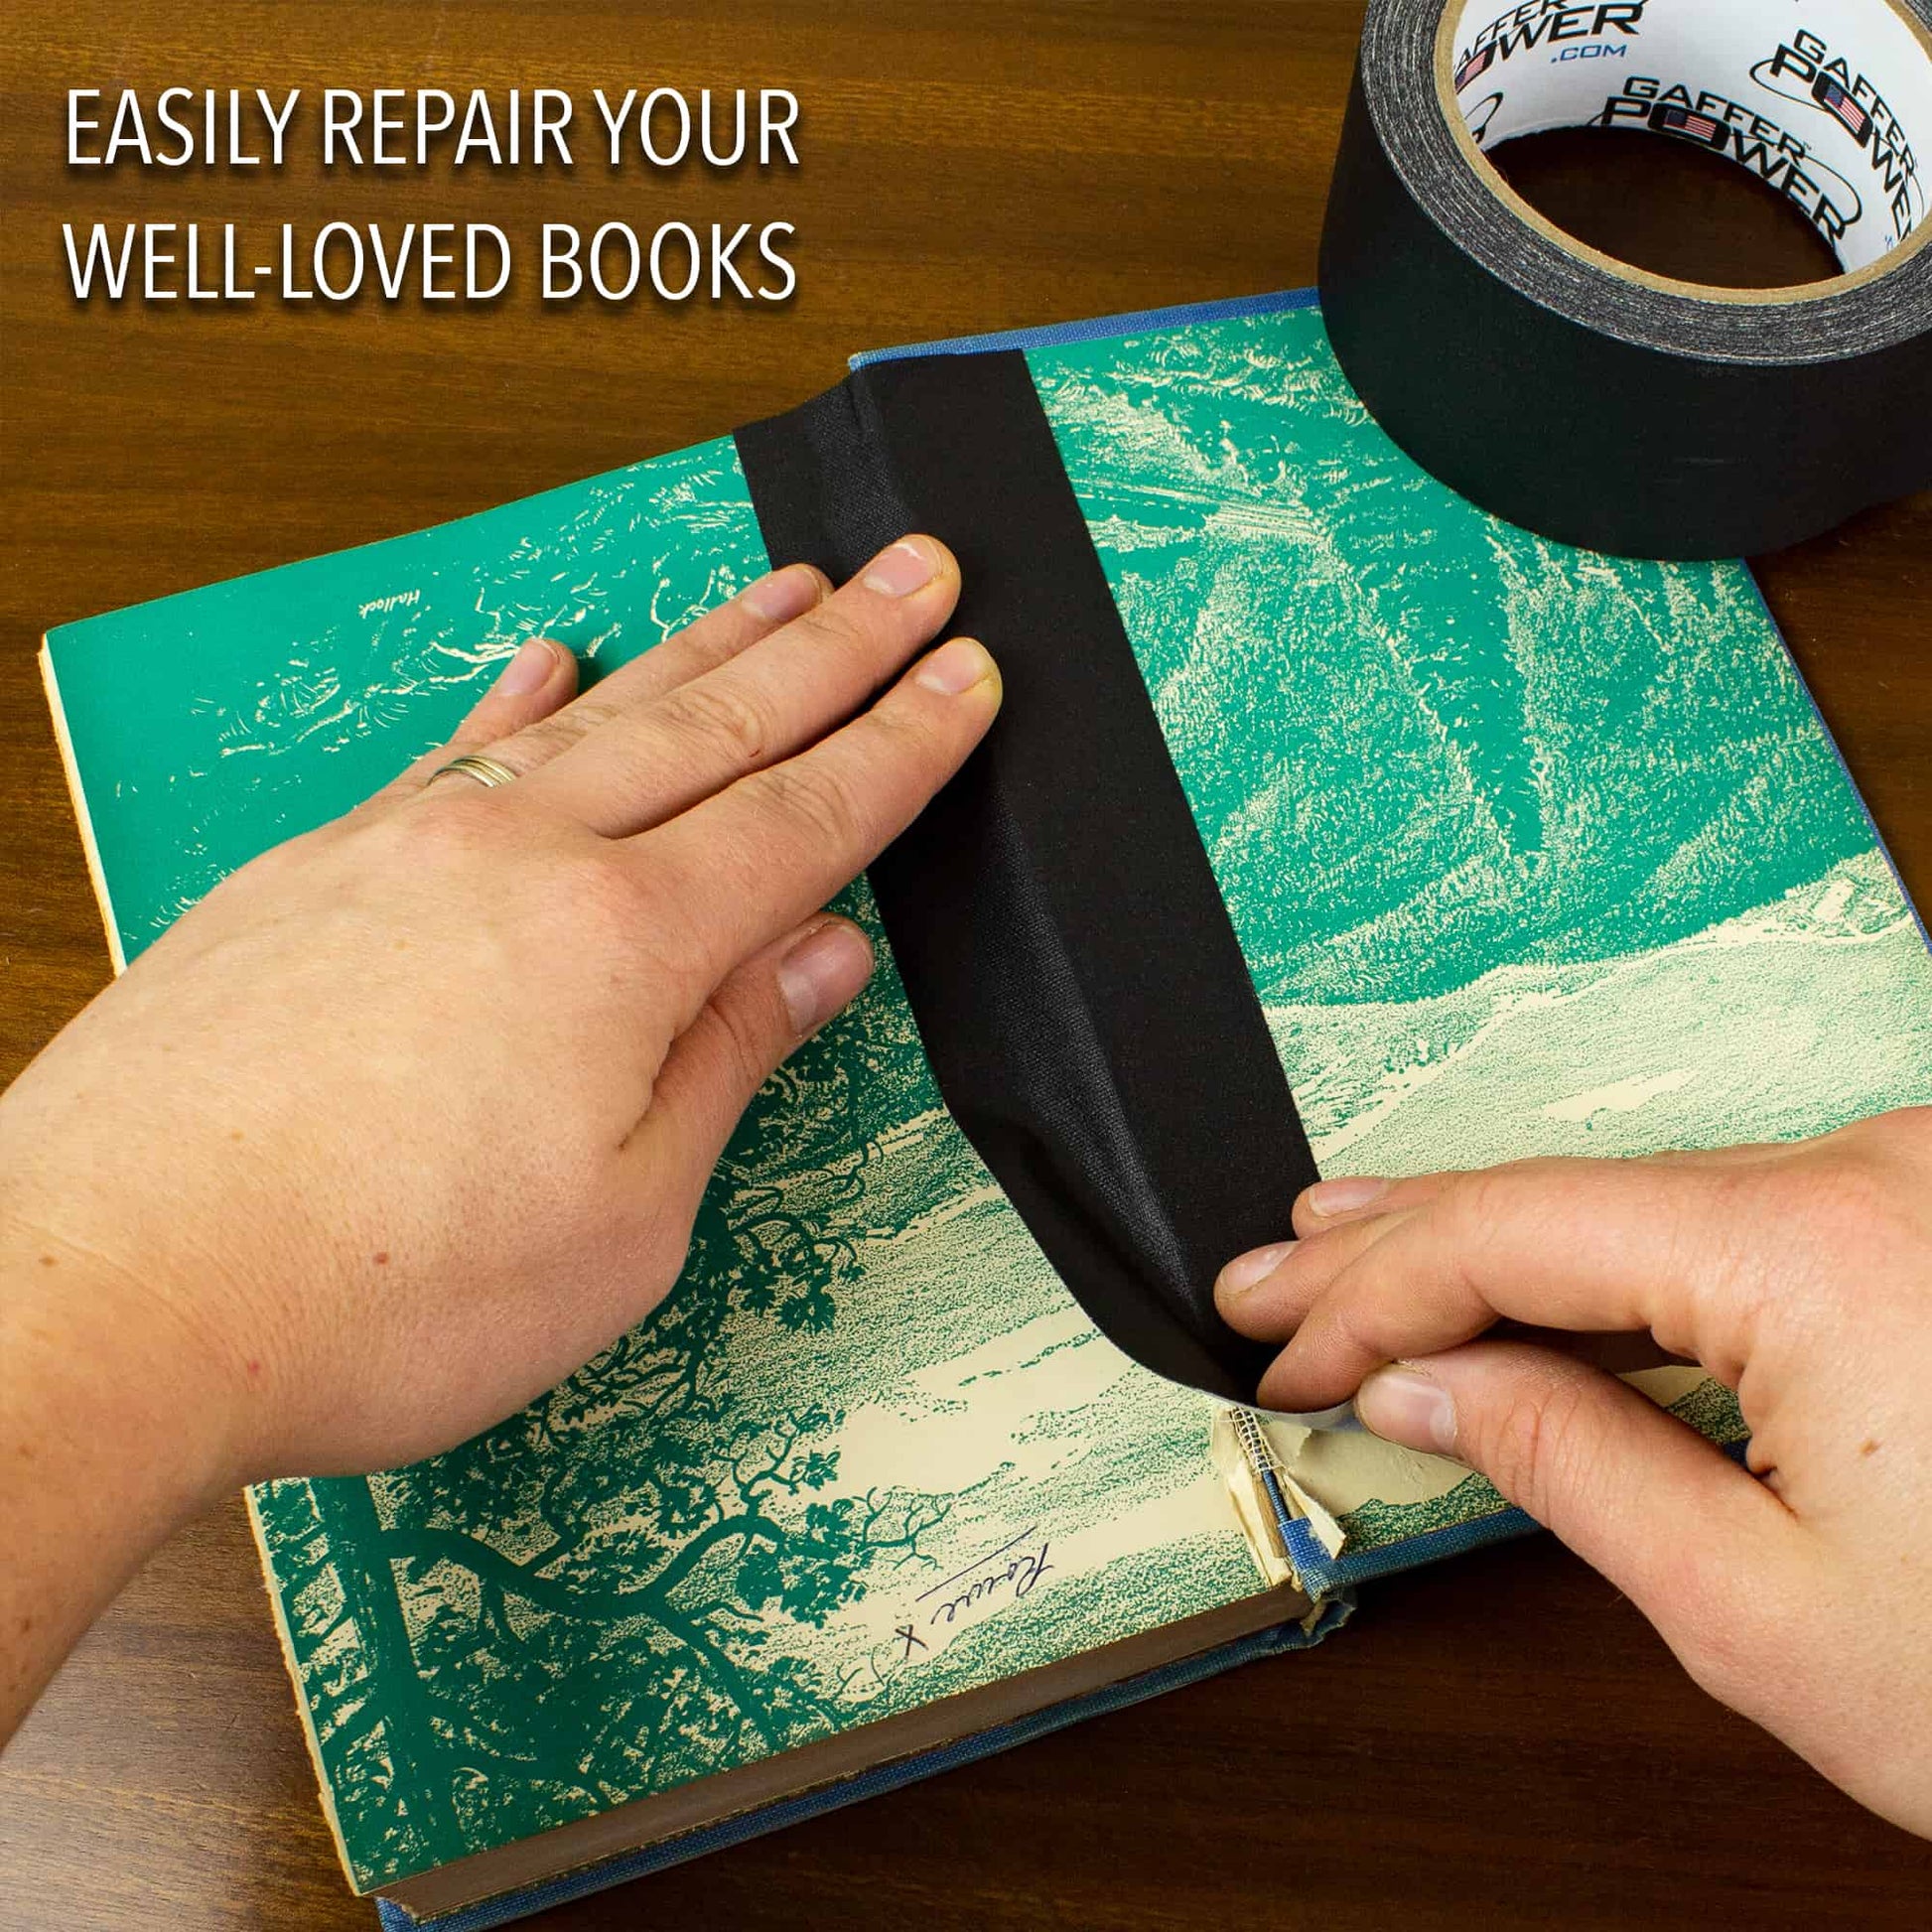 Bookbinding Tape, Cloth Book Repair Tape, Brown, USA Quality